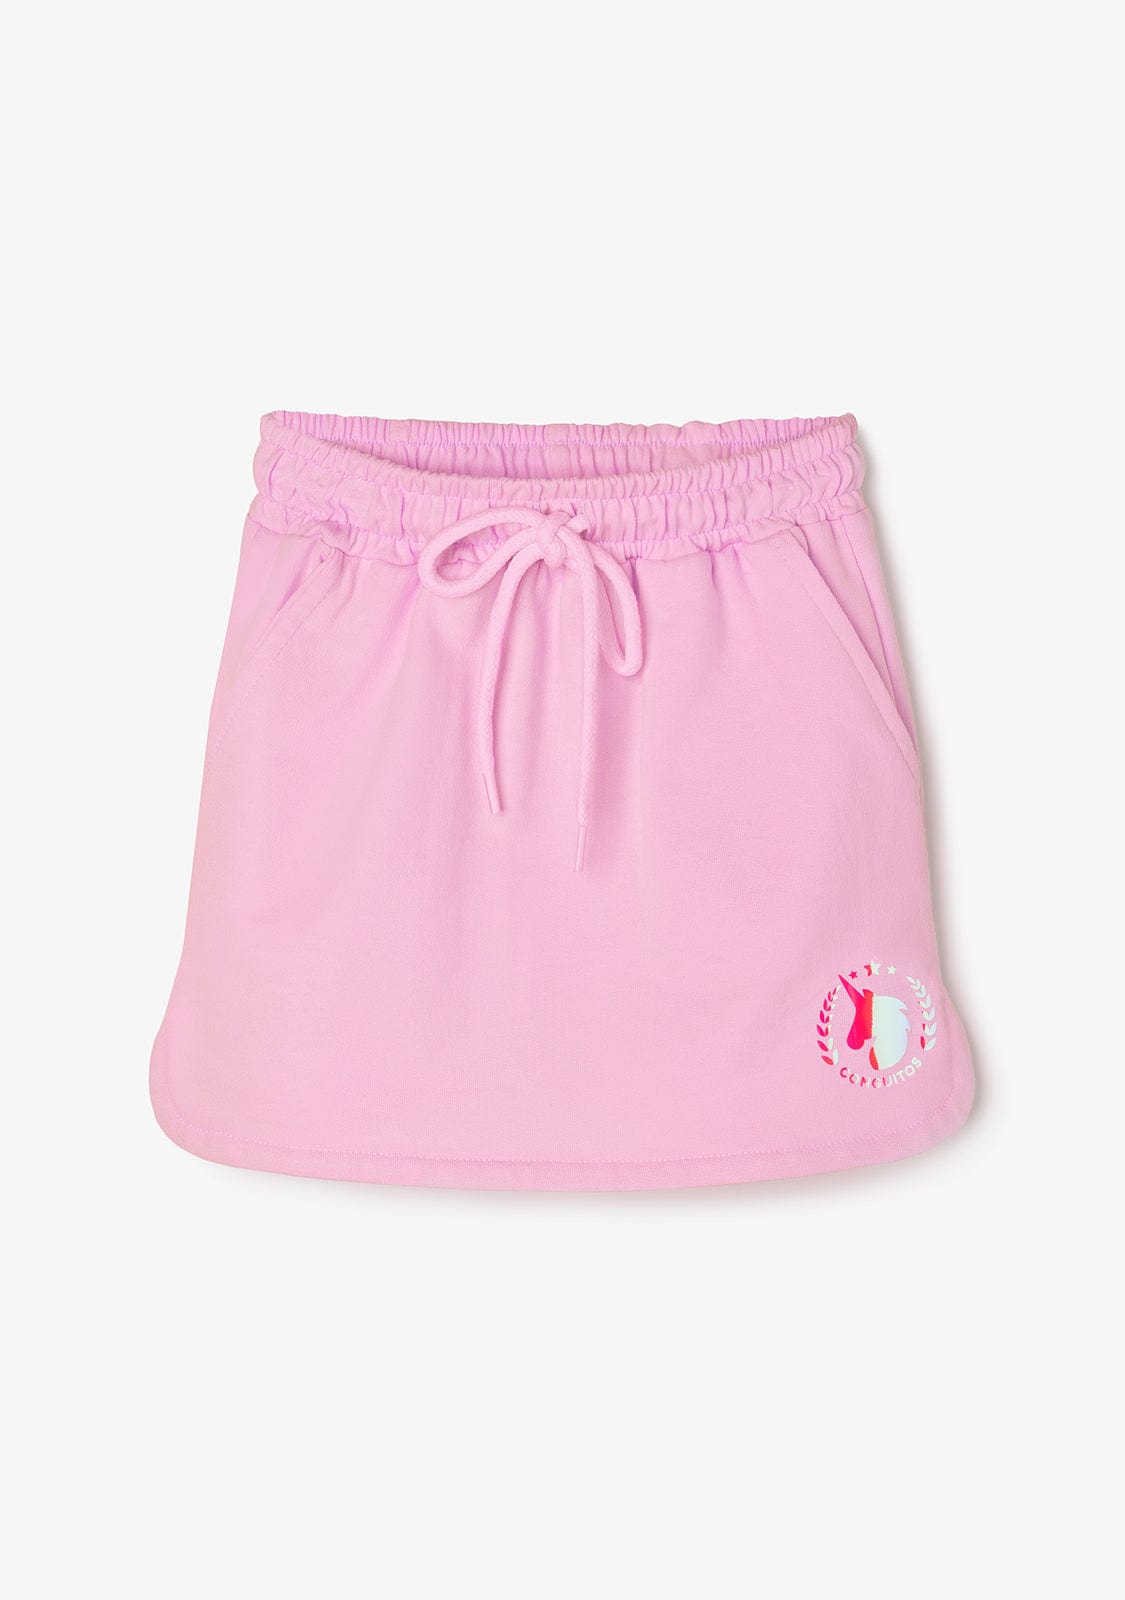 CONGUITOS TEXTIL Clothing Girl's Pink Plush Plain Sports Skirt